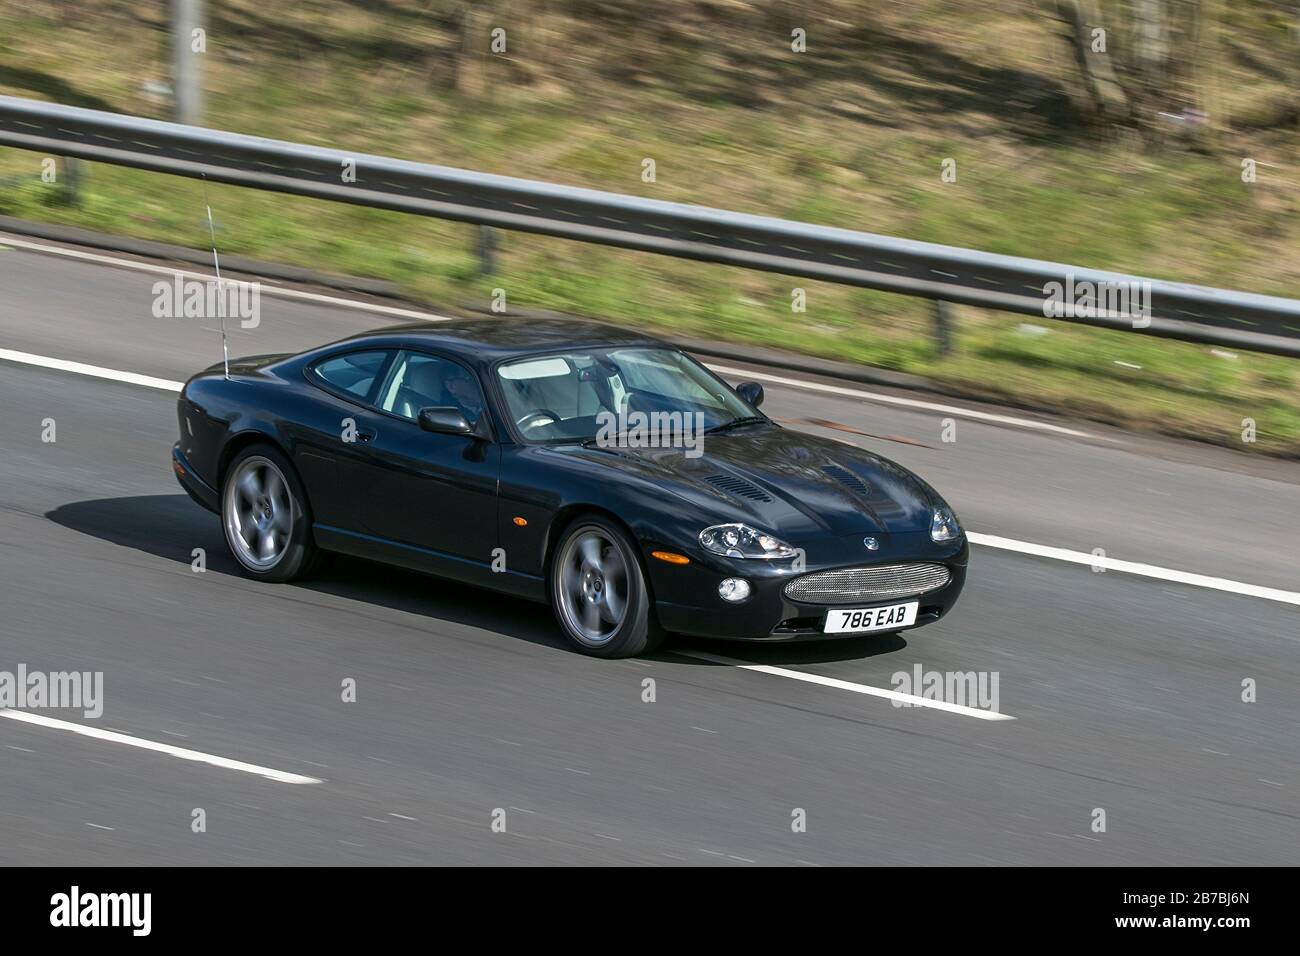 786EAB Jaguar Xkr Coupe Auto Black Car Petrol driving on the M6 motorway near Preston in Lancashire, UK Stock Photo